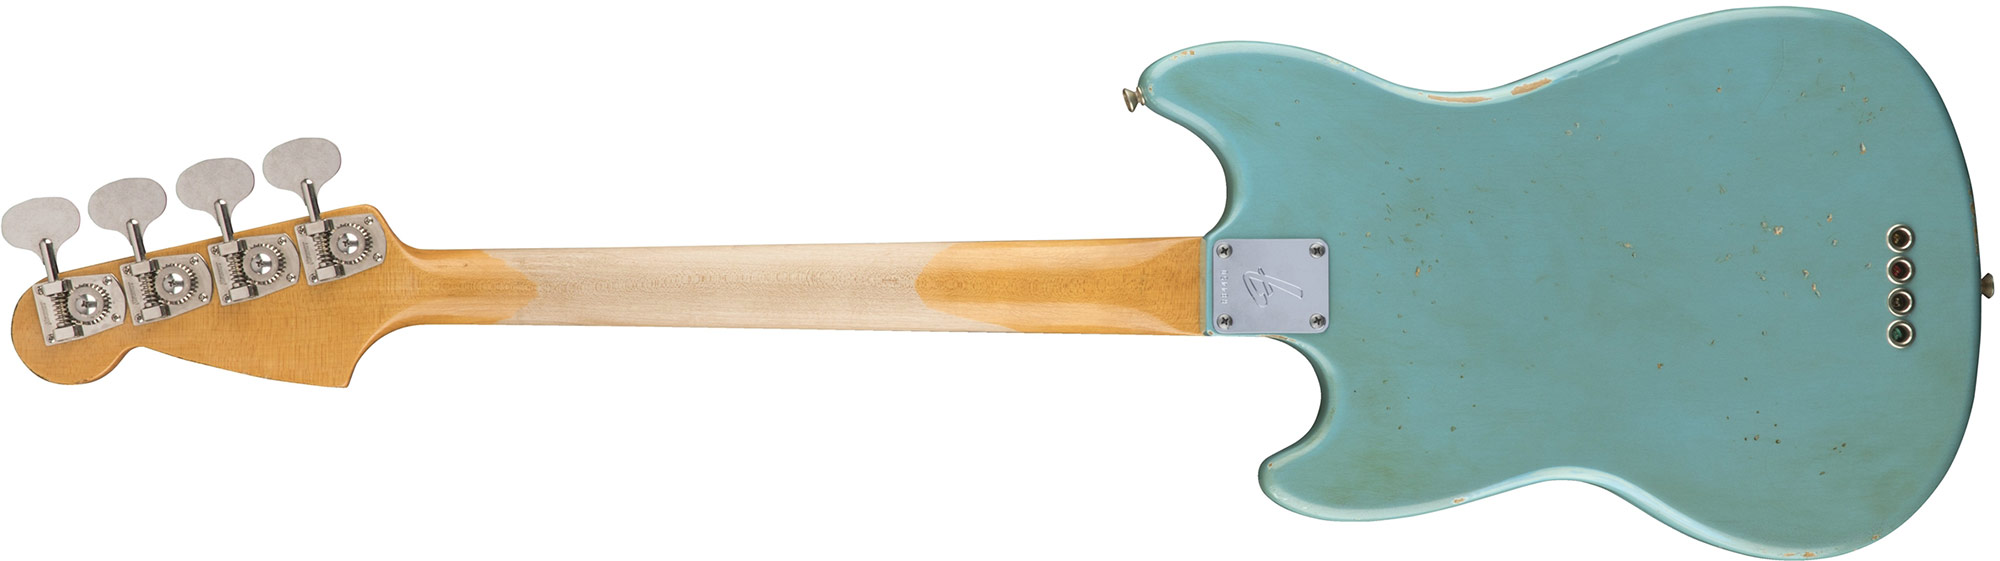 Fender Justin Meldal-johnsen Jmj Mustang Bass Road Worn Mex Rw - Faded Daphne Blue - Short scale elektrische bas - Variation 1